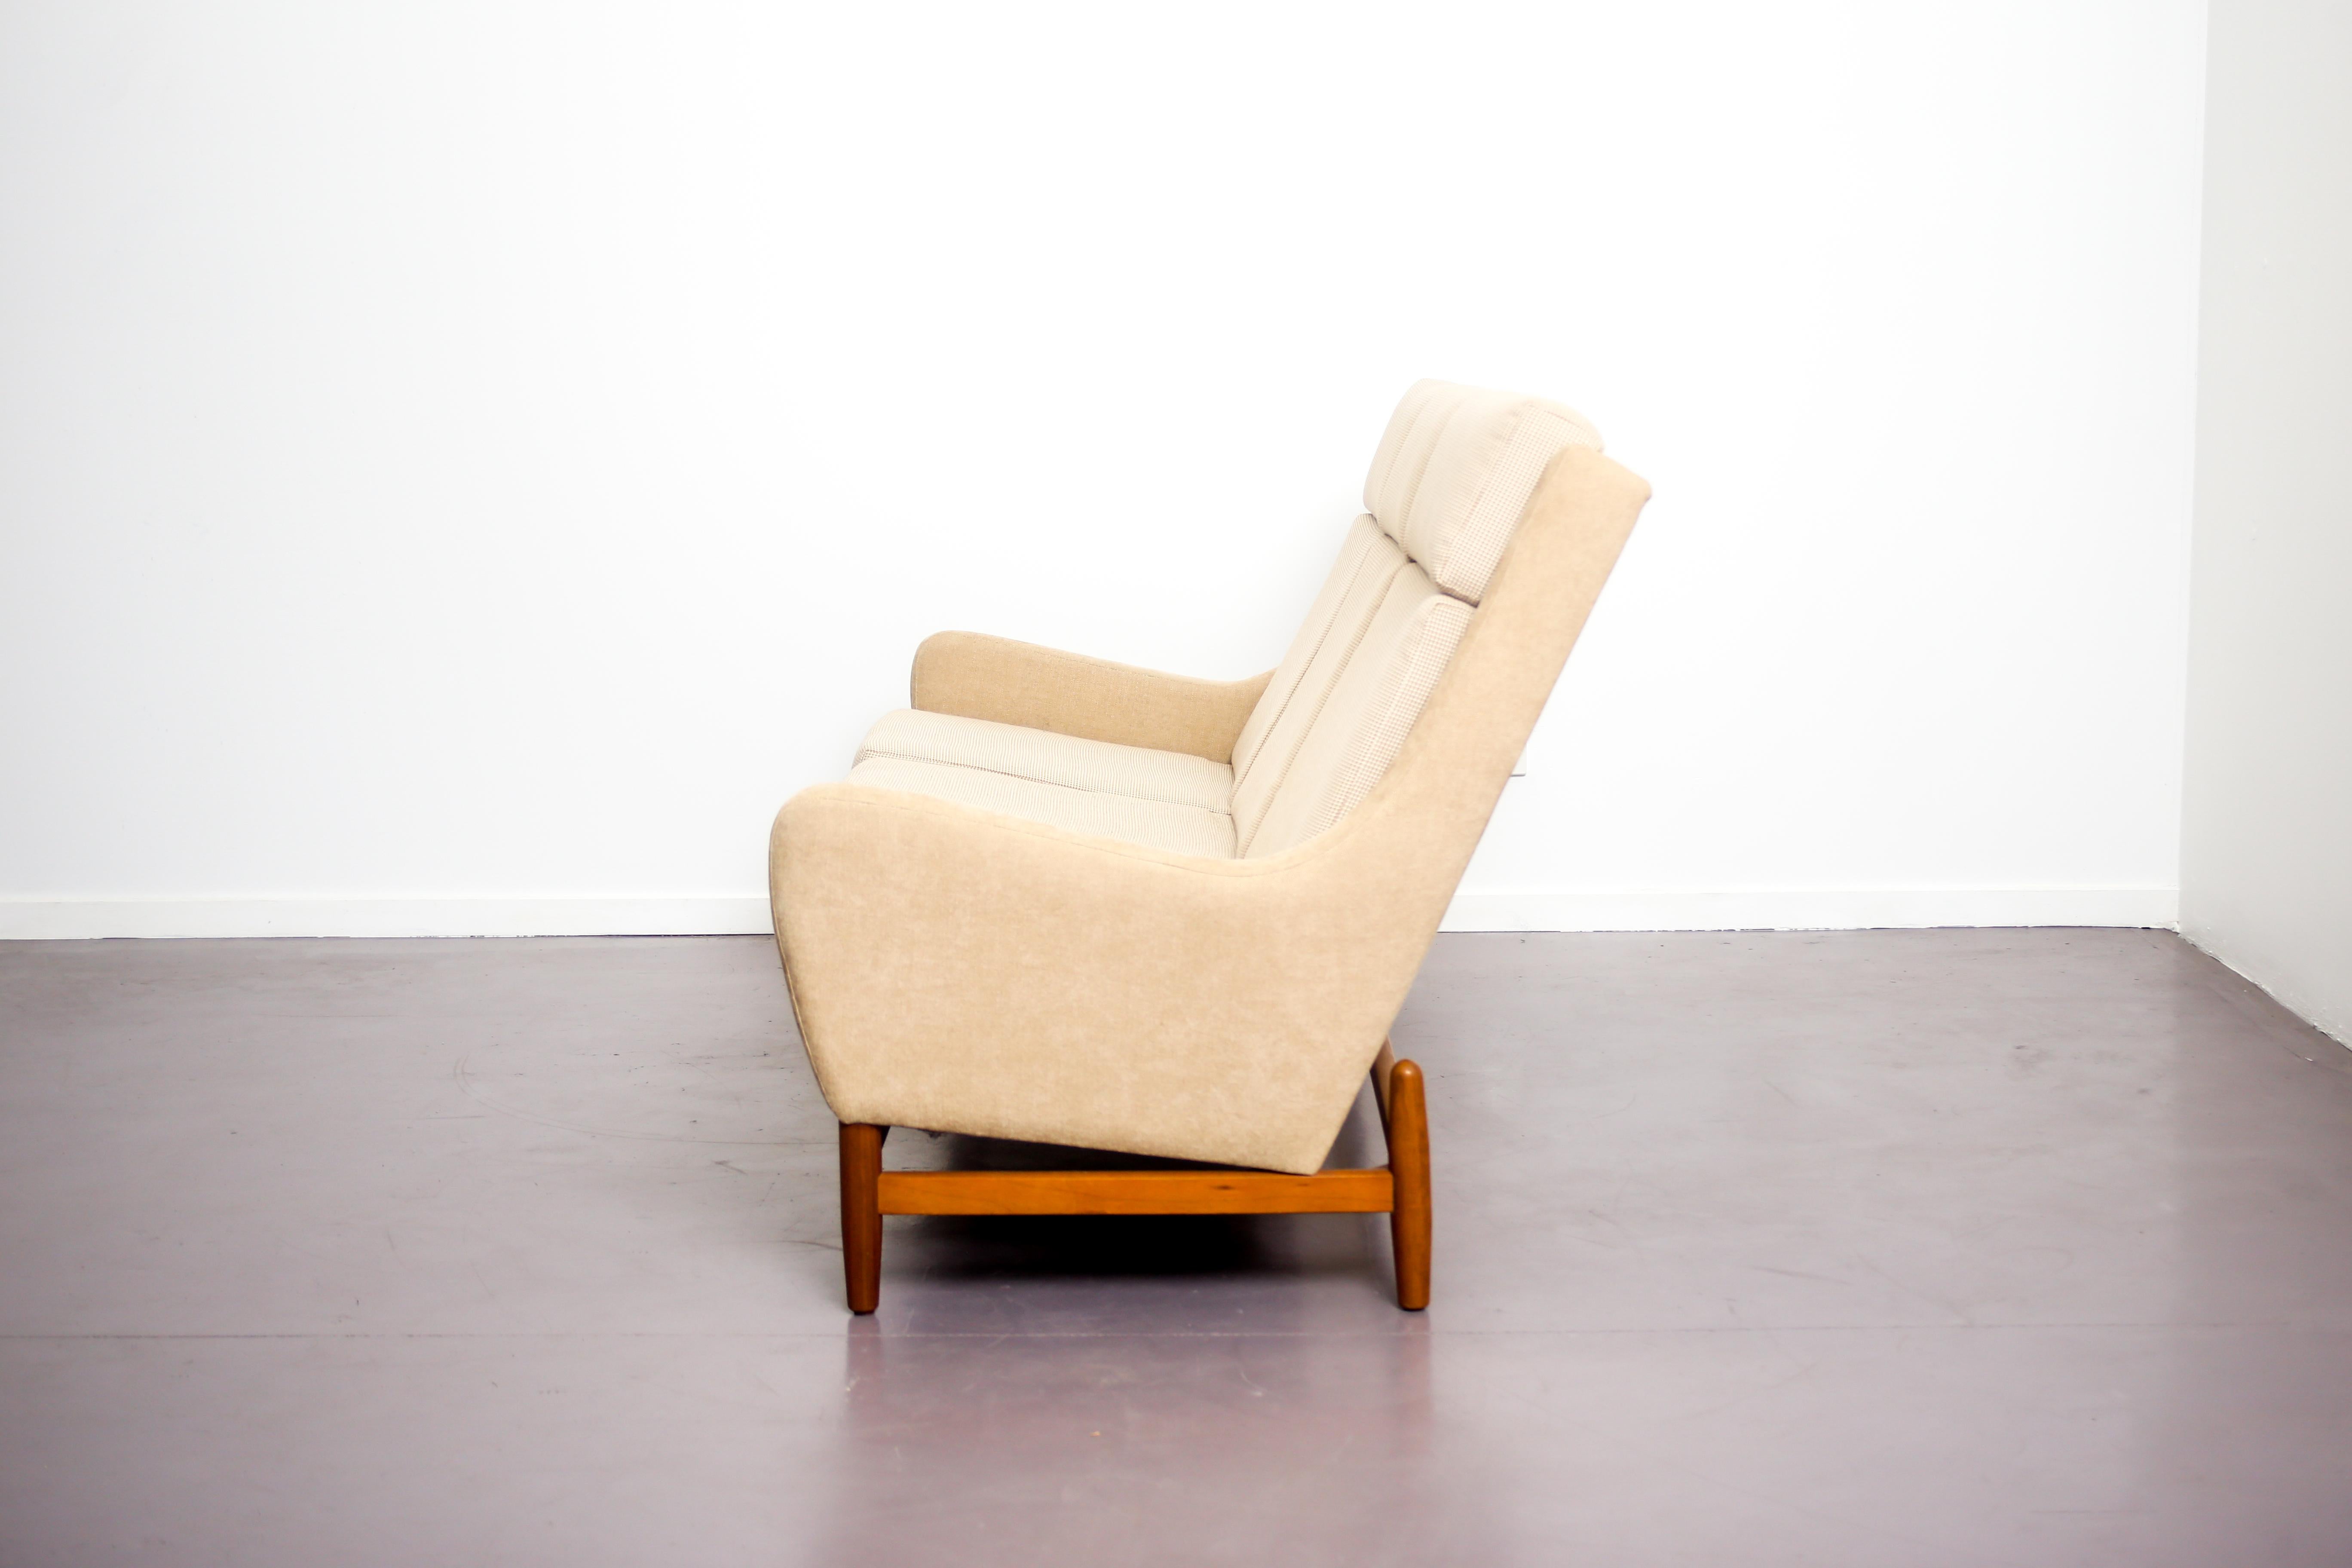 Fully restored Danish midcentury sofa three seats in cream color and teak.